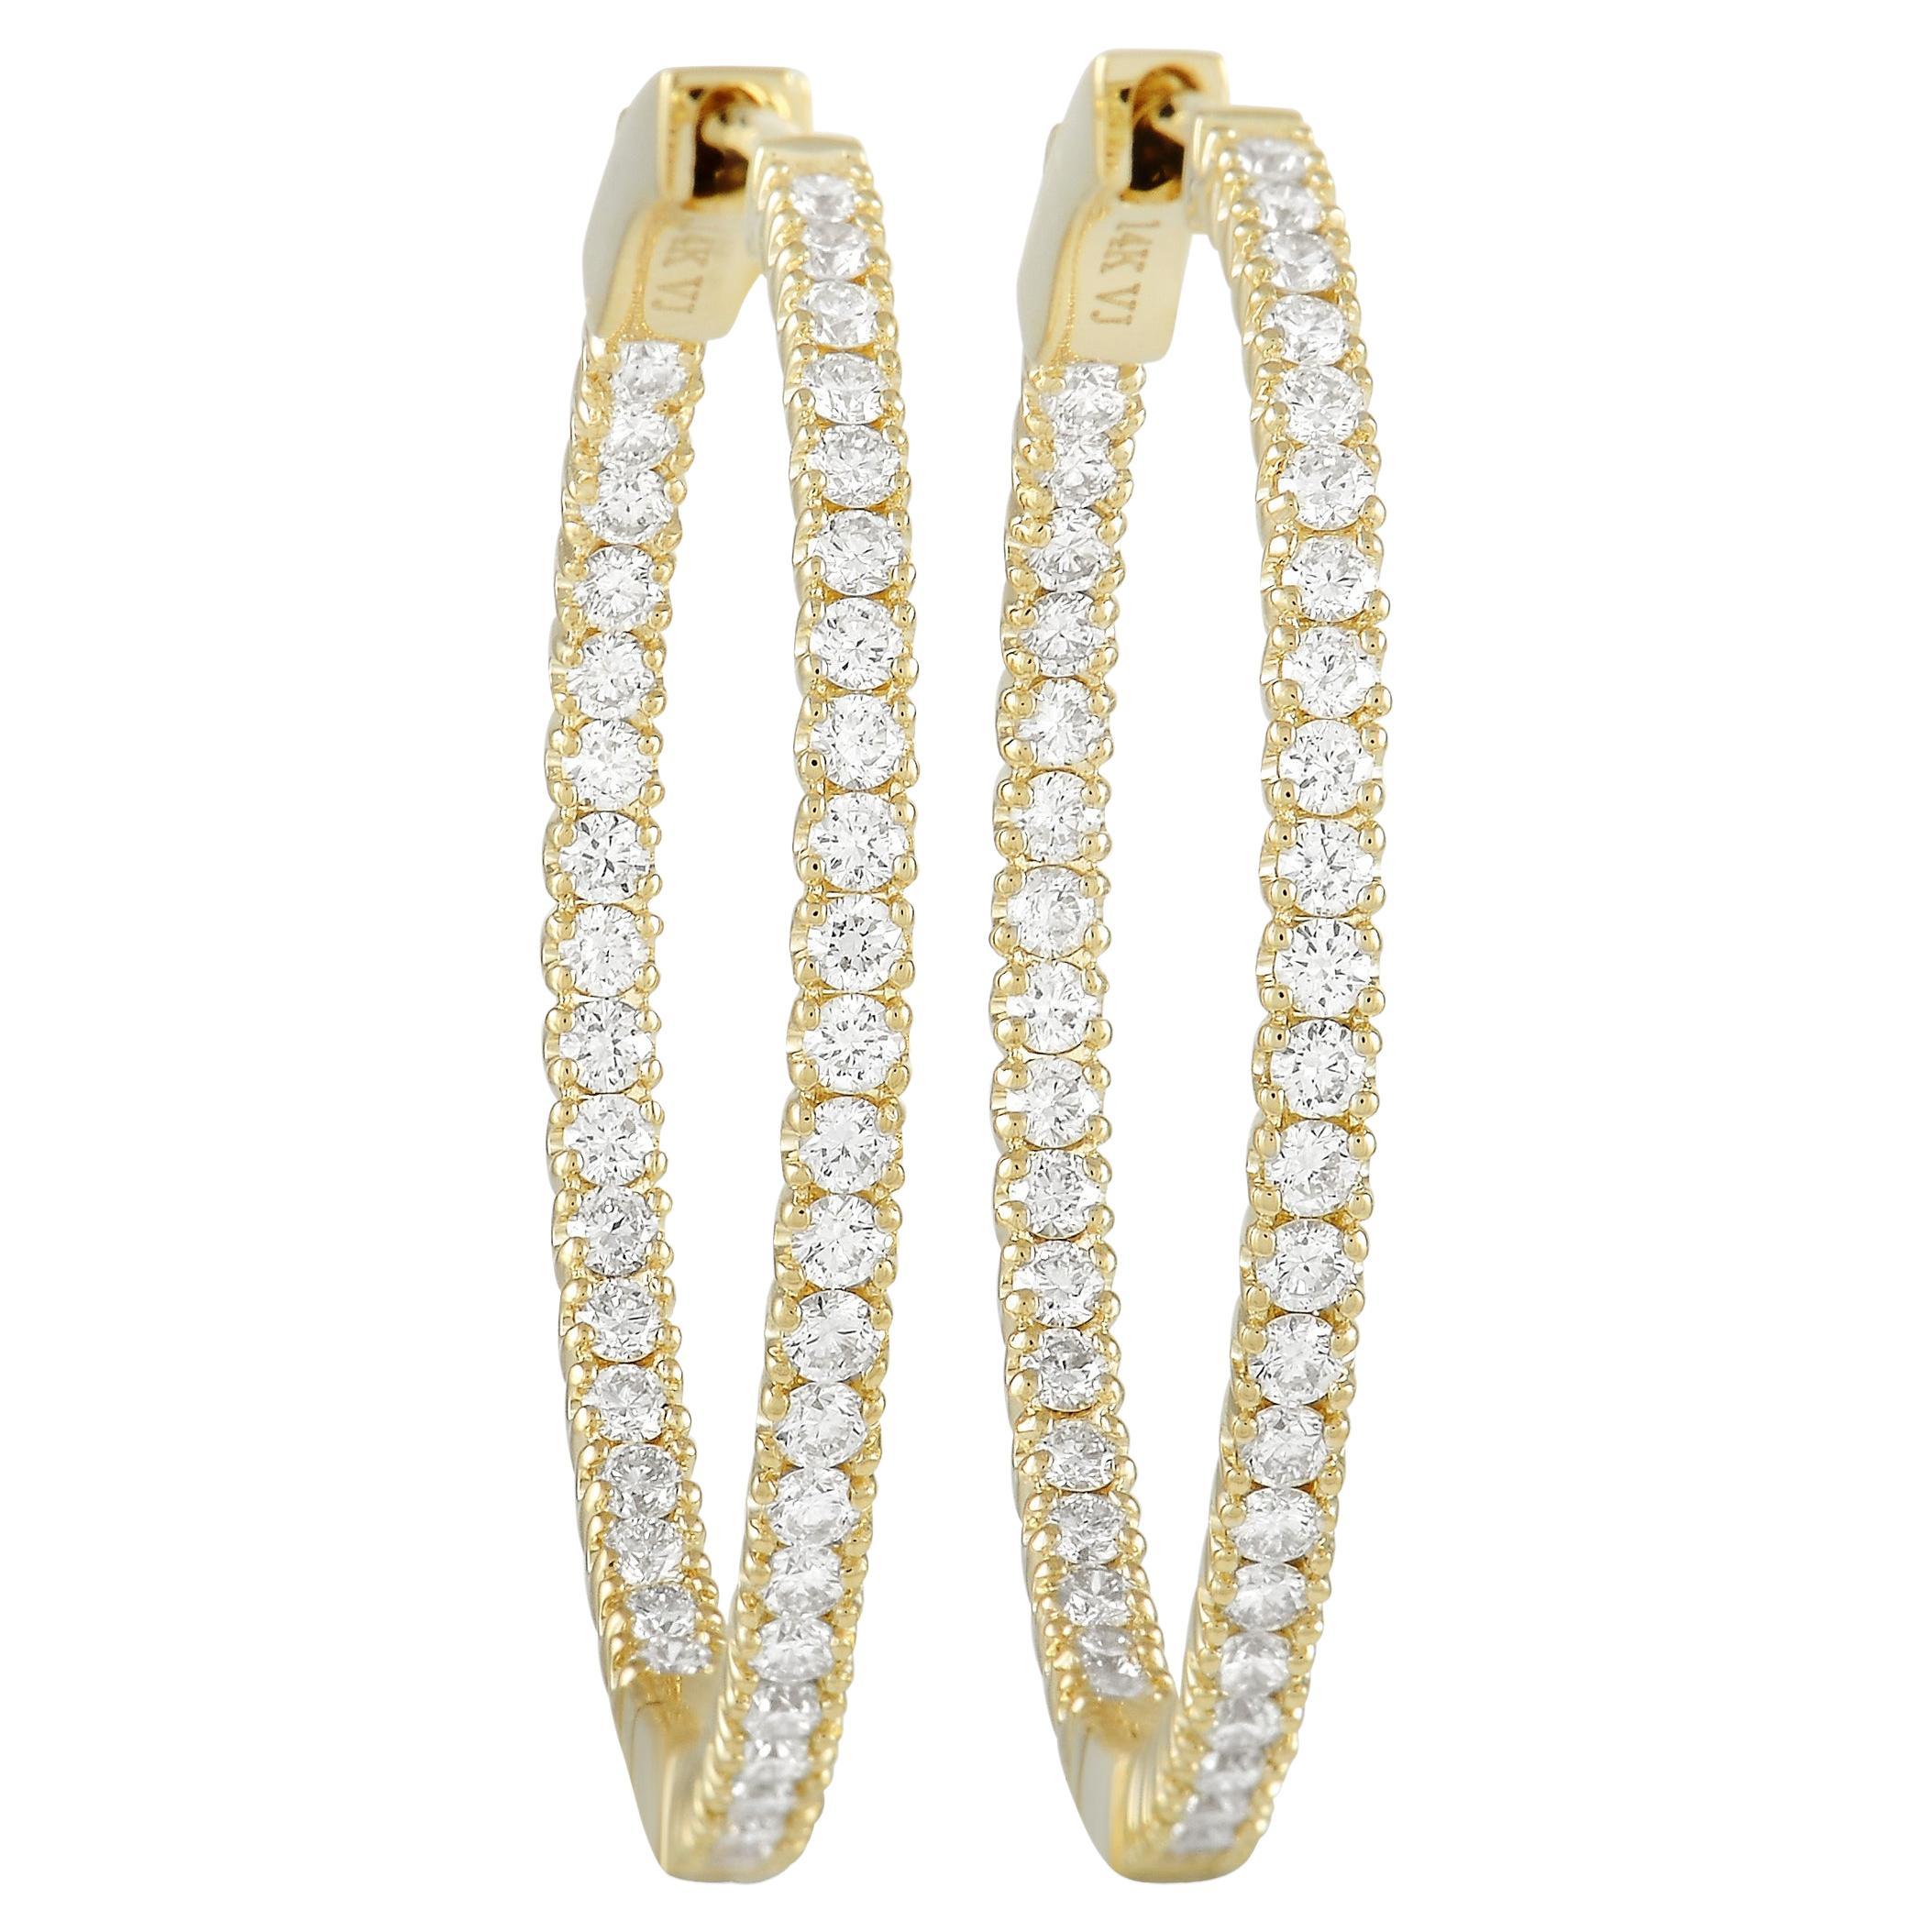 LB Exclusive 14K Yellow Gold 1.35 ct Diamond Hoop Earrings